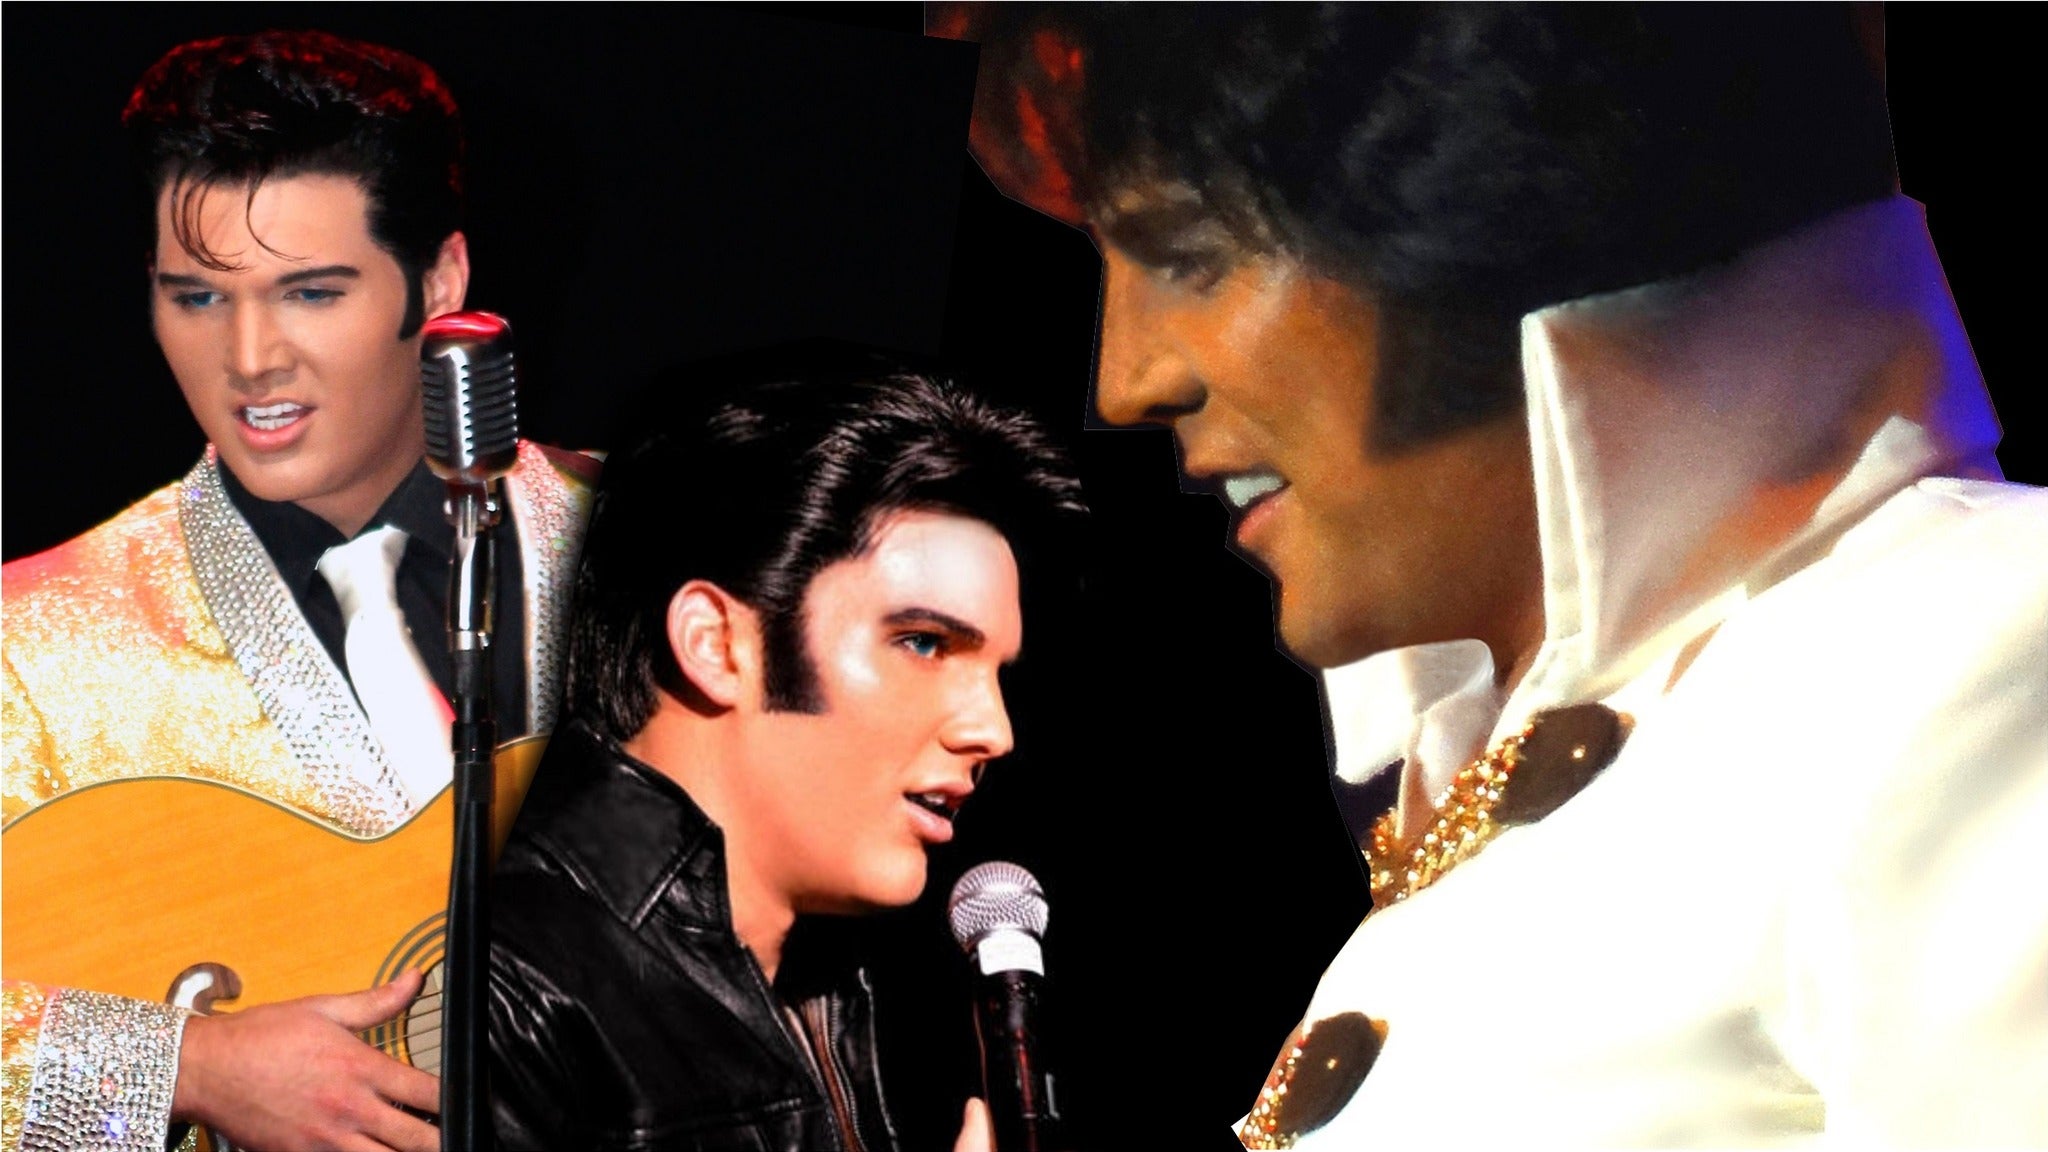 Elvis/Elvis/Elvis in Richmond promo photo for Encore Member presale offer code